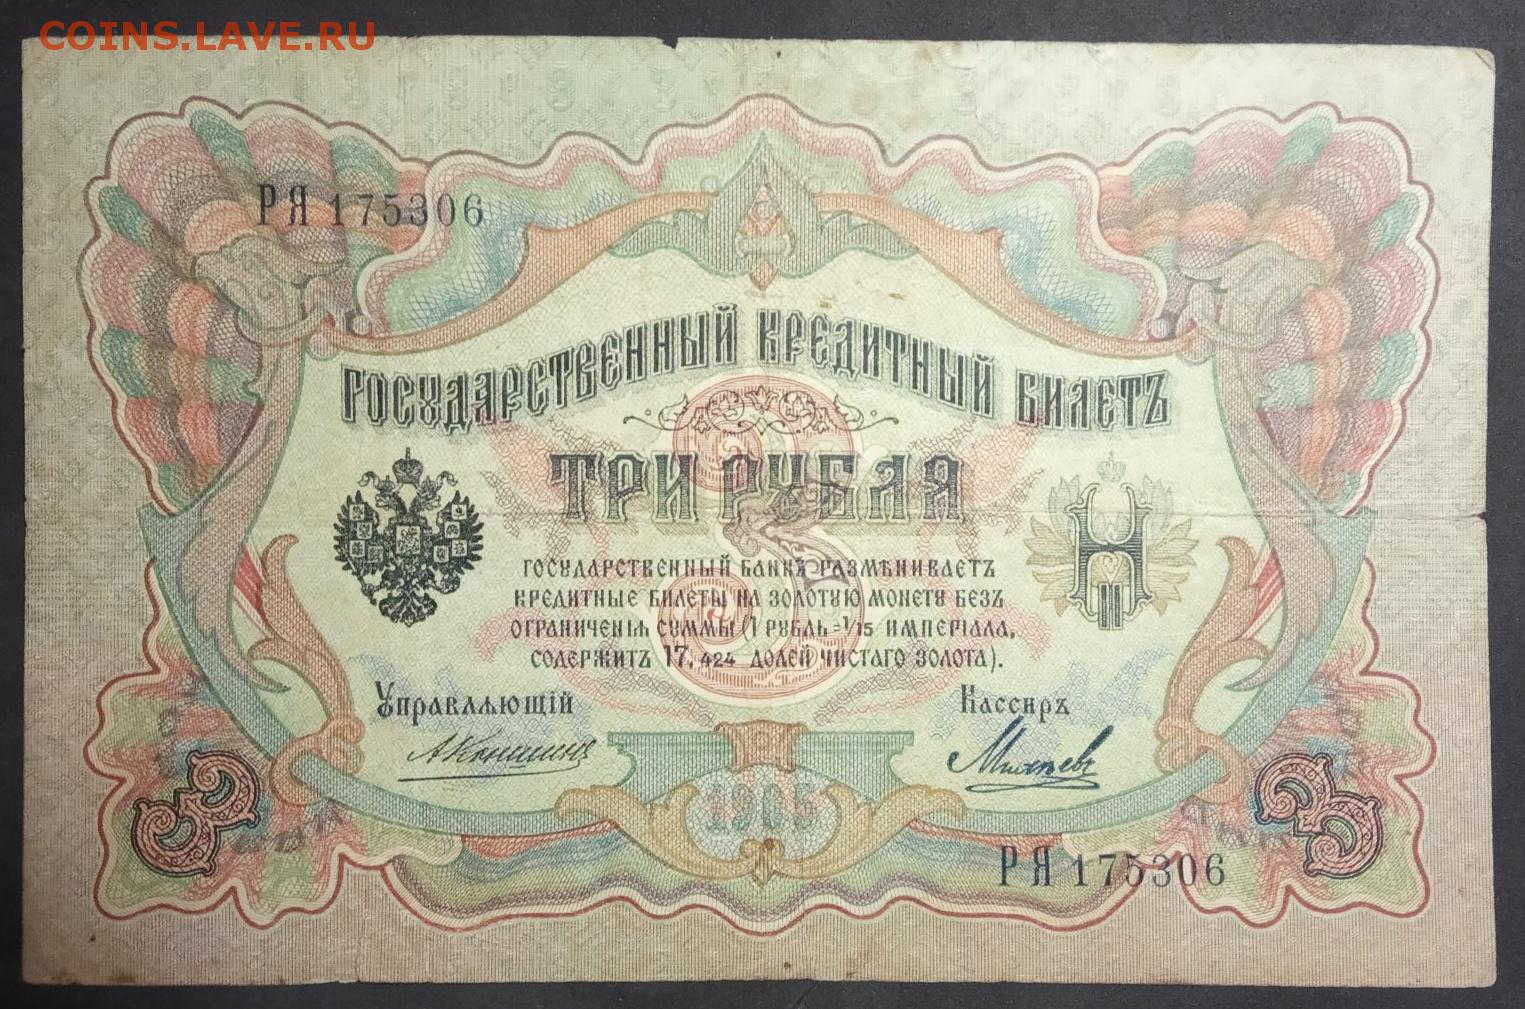 3 рубля 1905 года. Государственный кредитный билет. 3 Рубля. 1905г.. Царские ассигнации 1909 года. Государственный кредитный билет 3 рубля.